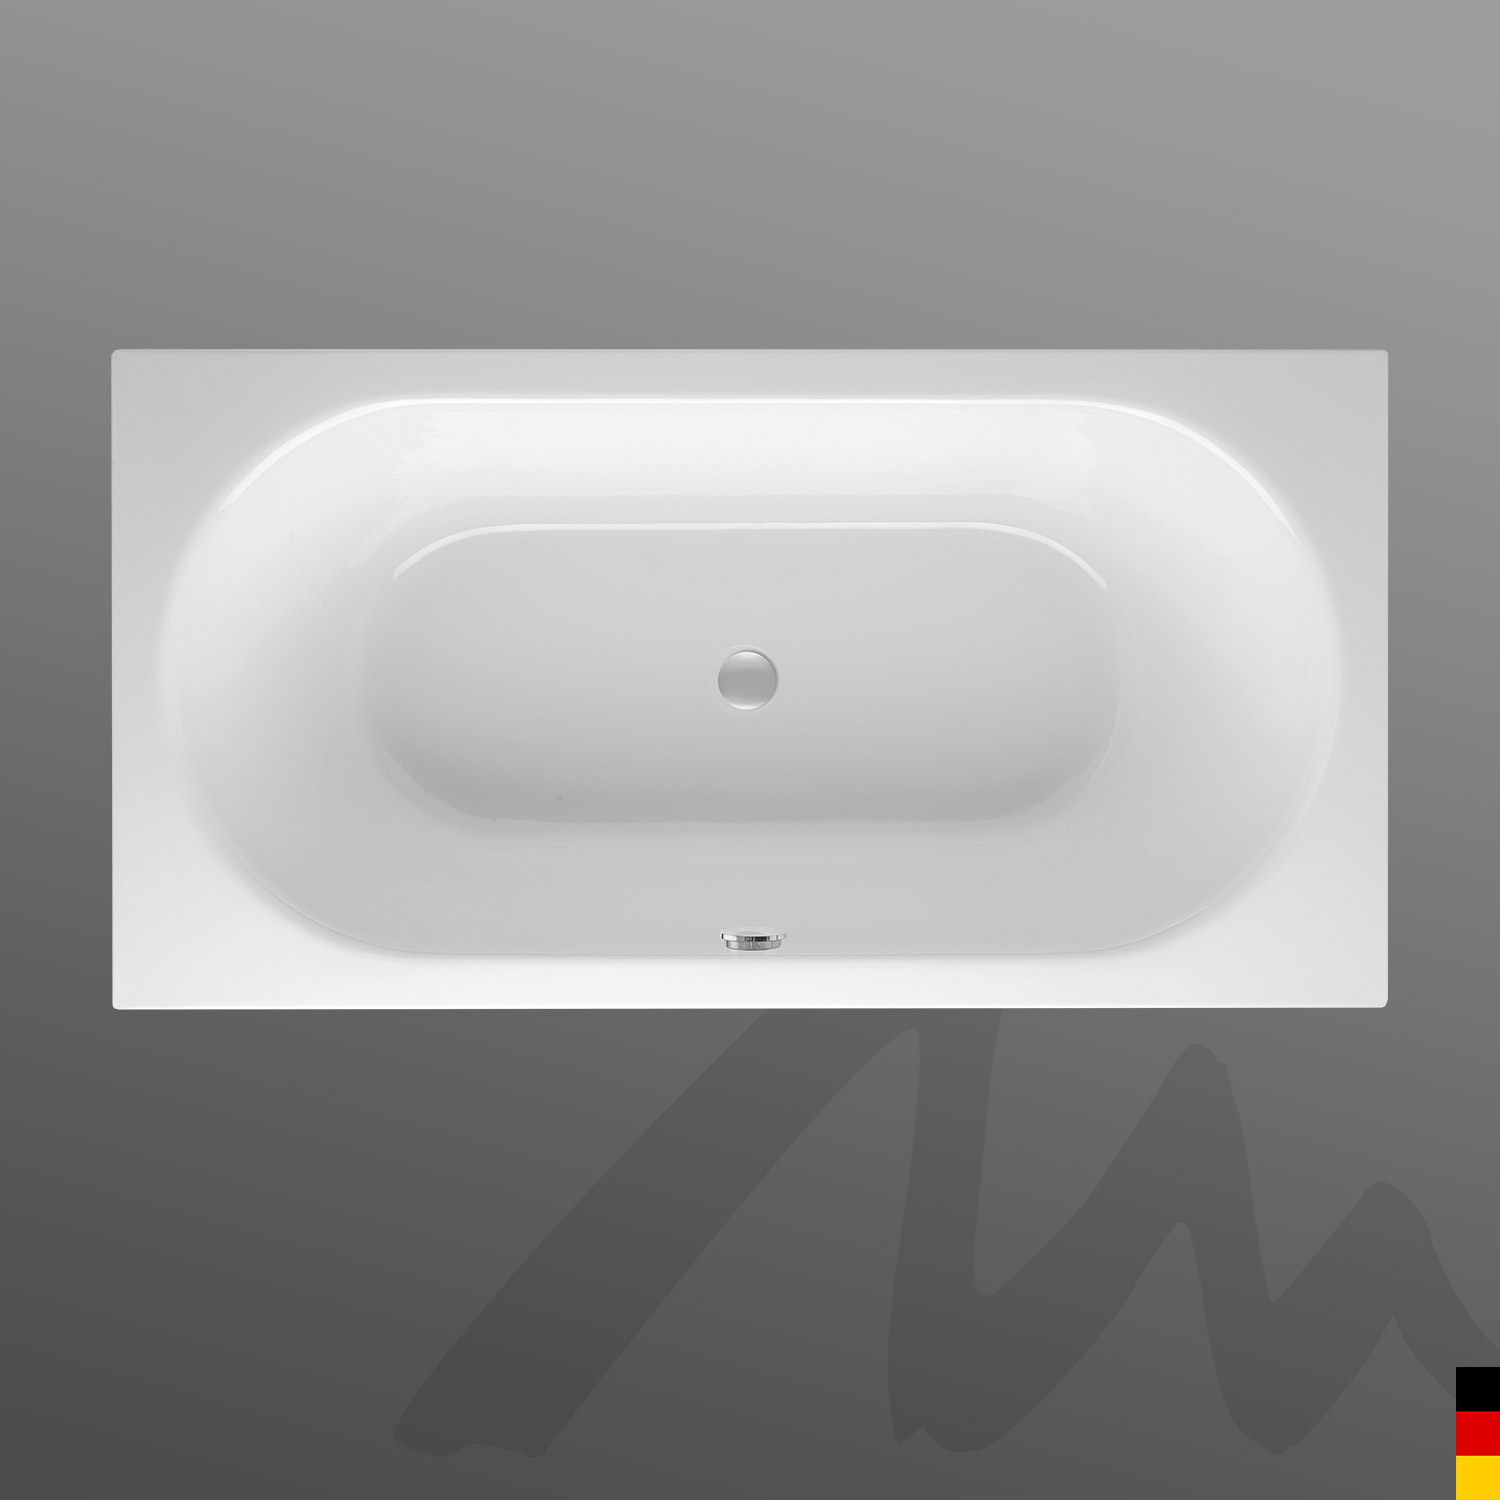 Mauersberger Badewanne Rechteck Ausana 185/95 duo  185x95x46cm  Farbe:rein-weiß